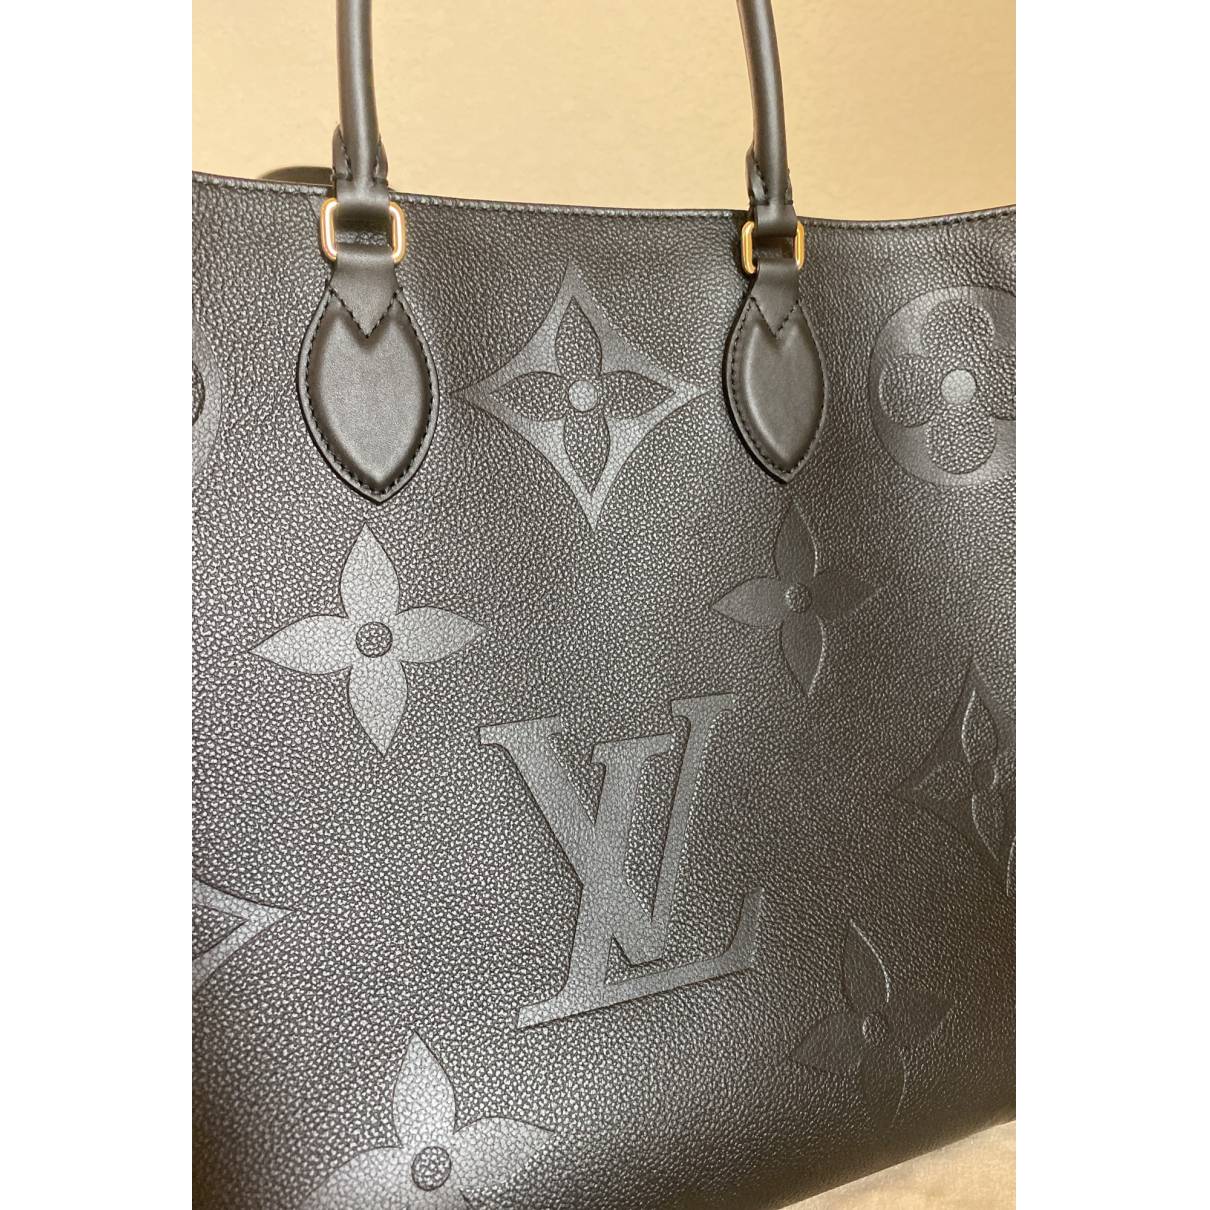 Wilshire leather handbag Louis Vuitton Black in Leather - 25250881